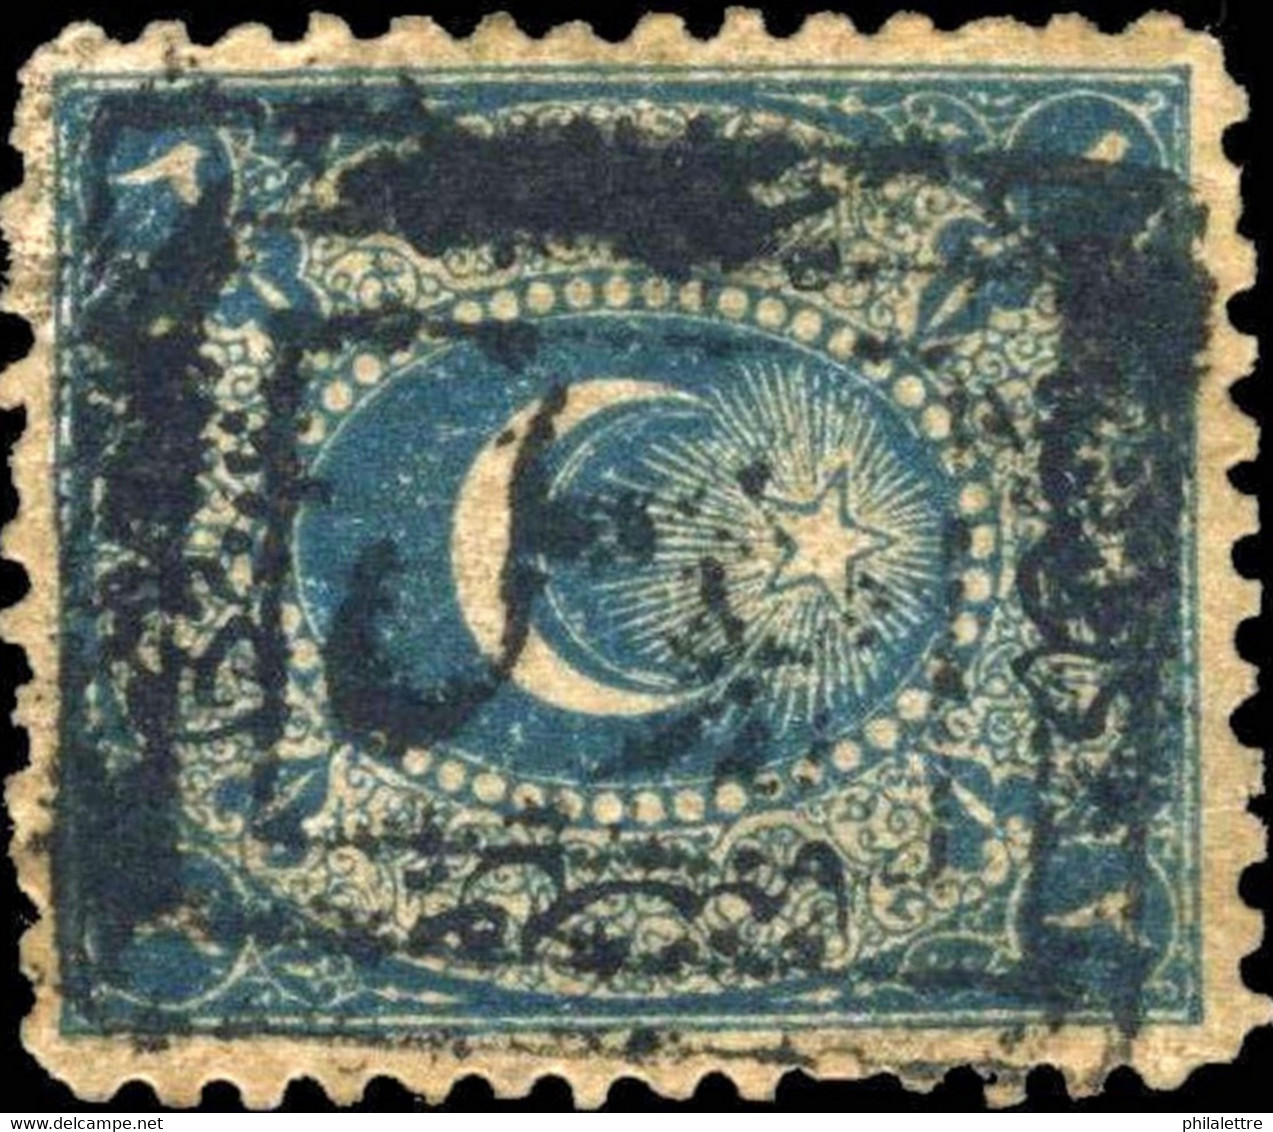 TURQUIE / TURKEY / TÜRKEI - MOSUL (IRAQ) POSTMARK /1867 DULOZ Mi.11 2Pi P.12 1/ 2 - Used Stamps